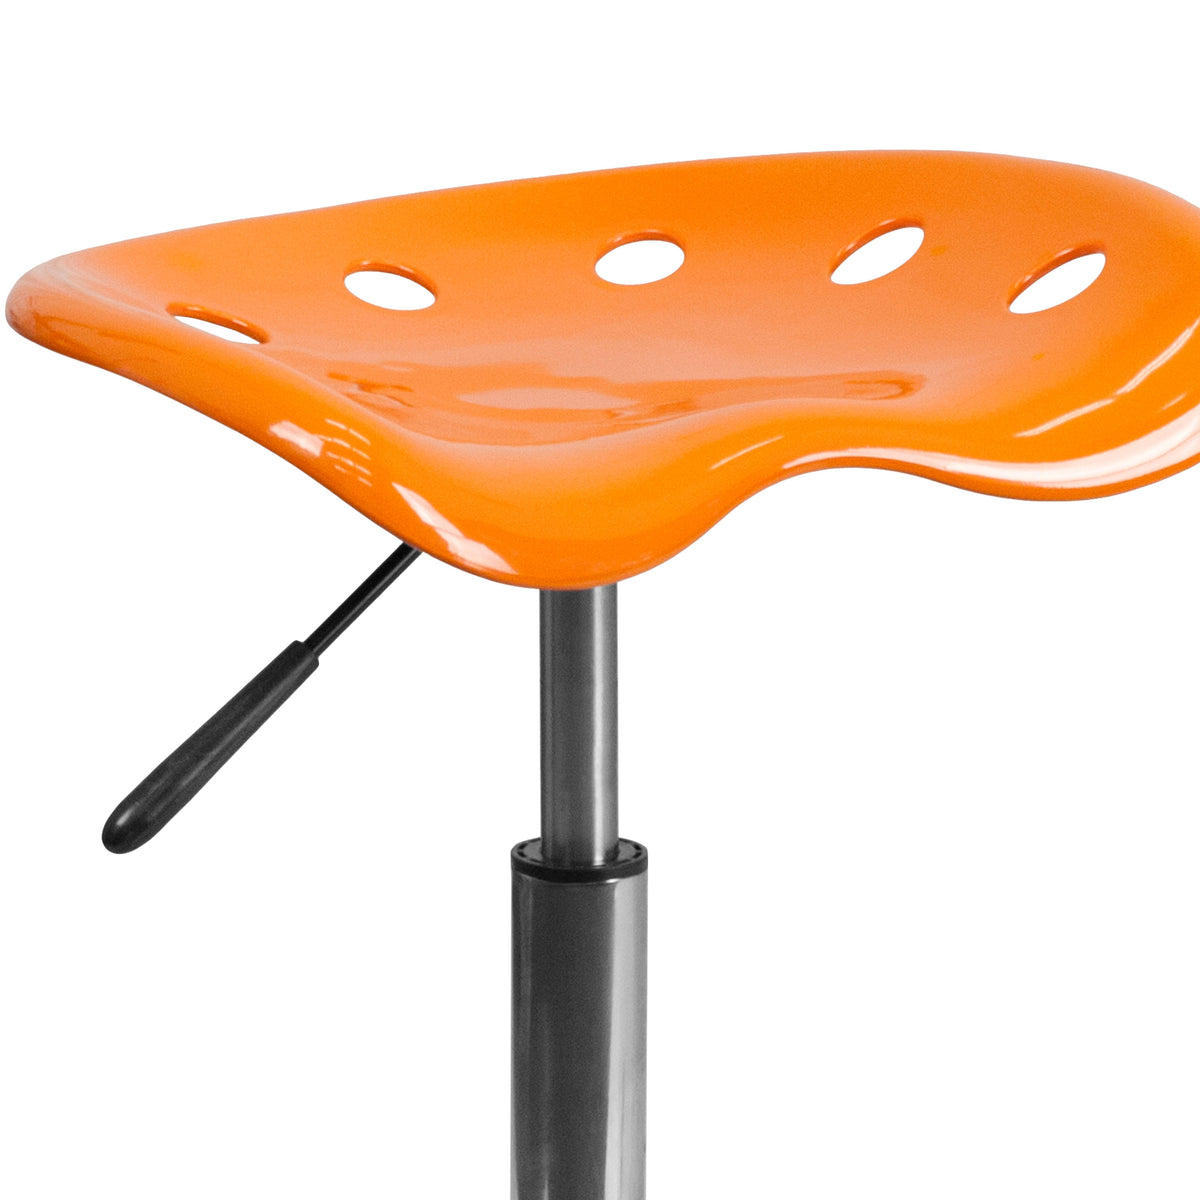 Orange |#| Vibrant Orange Tractor Seat and Chrome Stool - Drafting & Office Stools